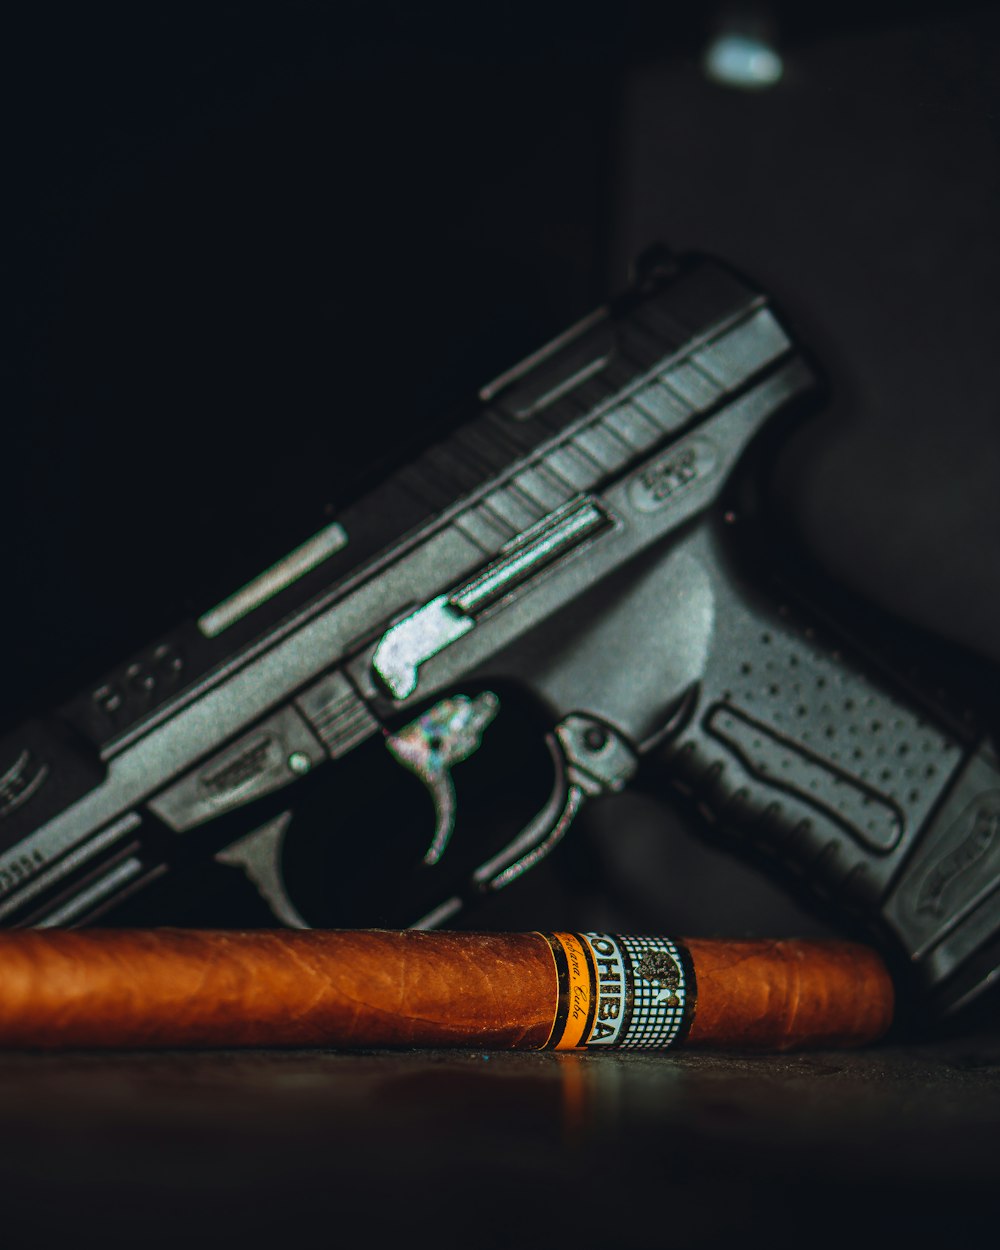 a cigar sitting next to a gun on a table